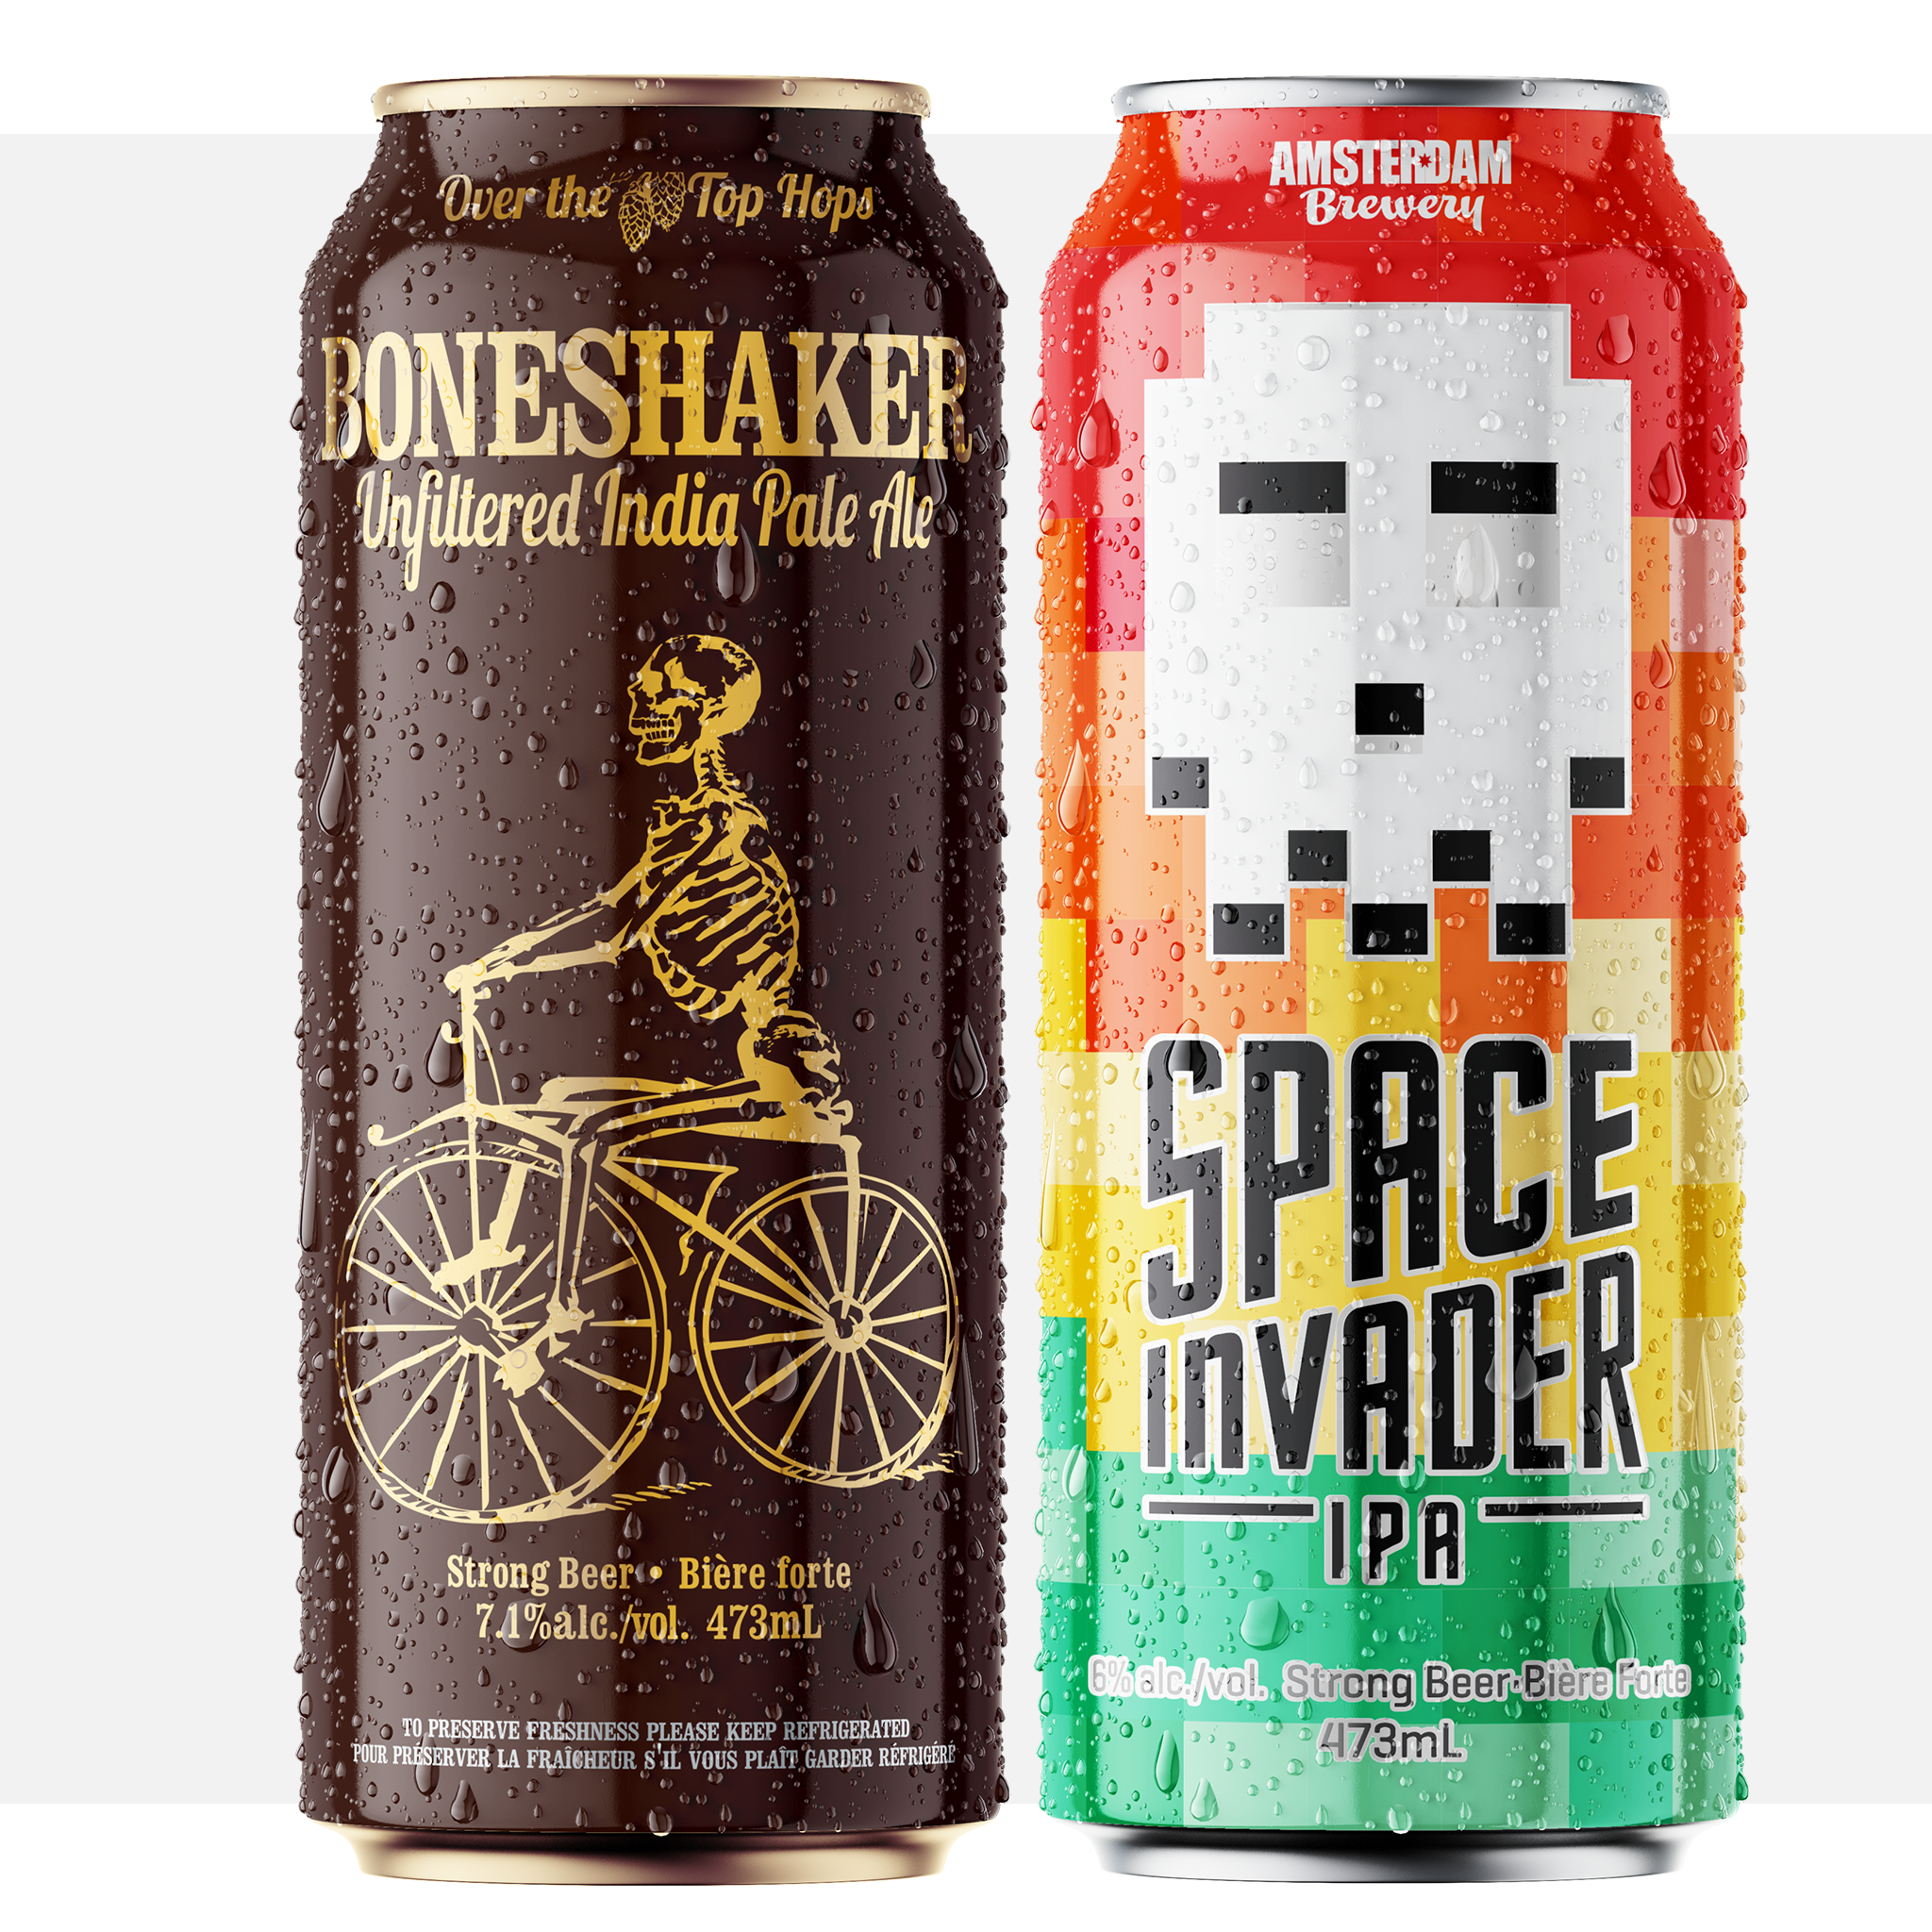 Boneshaker & Space Invader IPA Mix Pack | 25 Pack*